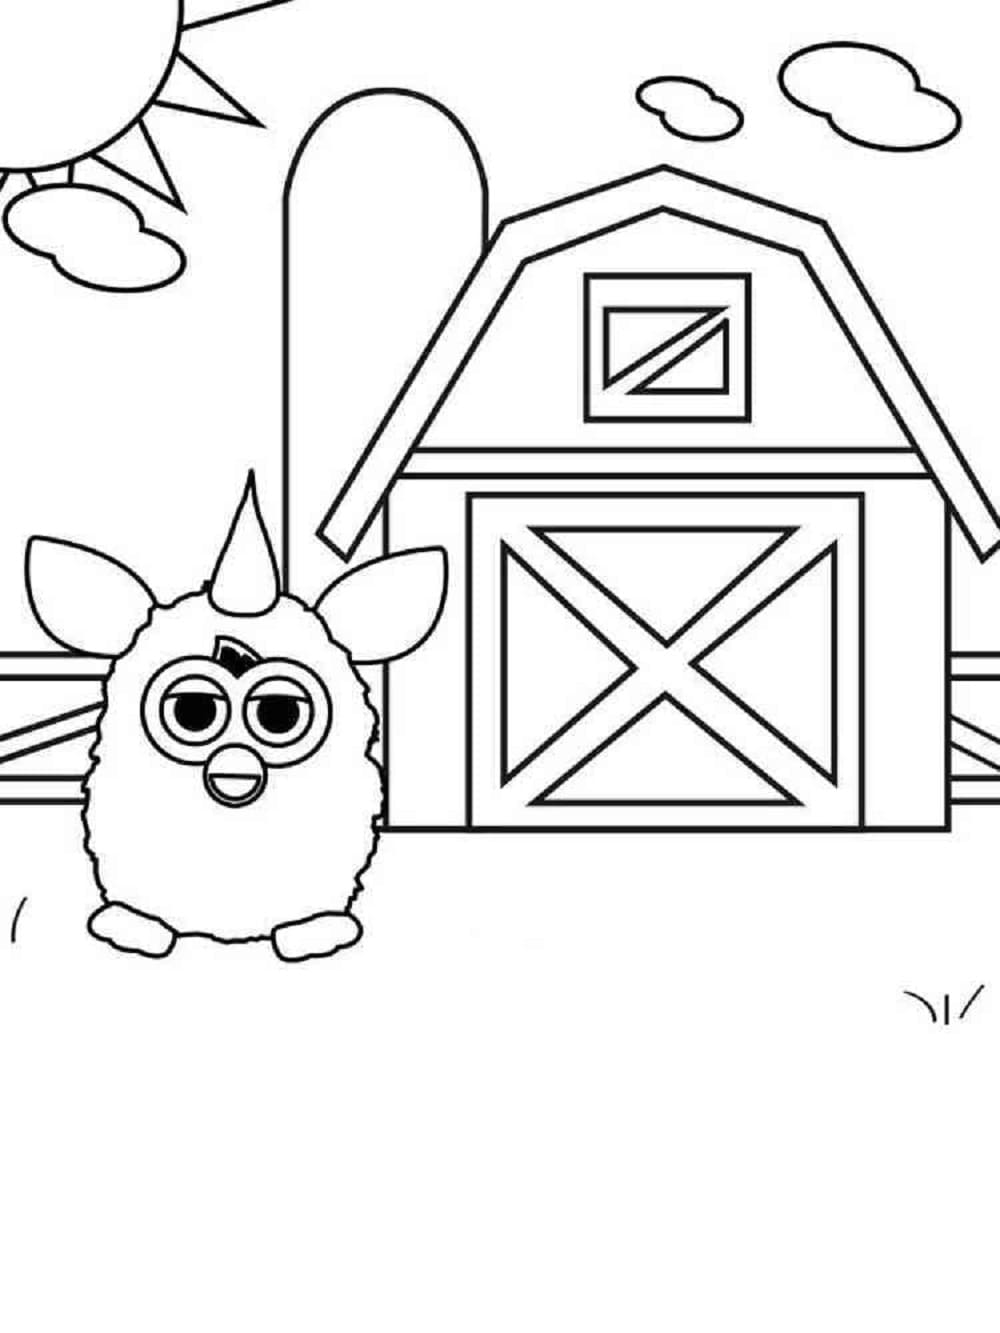 Printable Furby and Barn Coloring Page